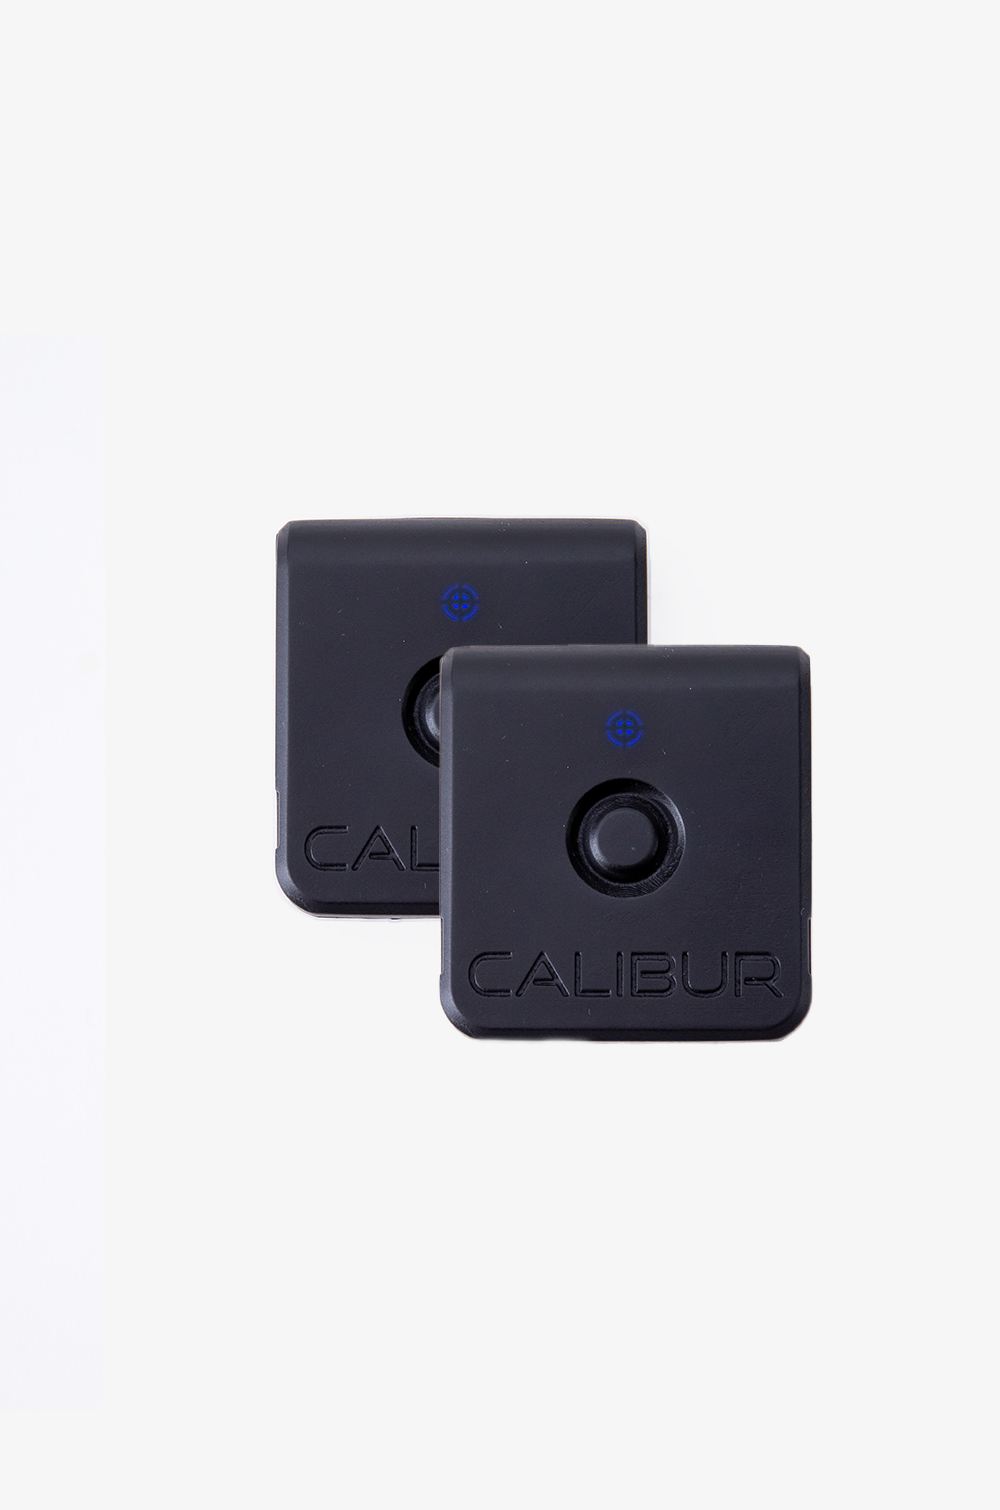 Calibur Wireless Box (Stk)